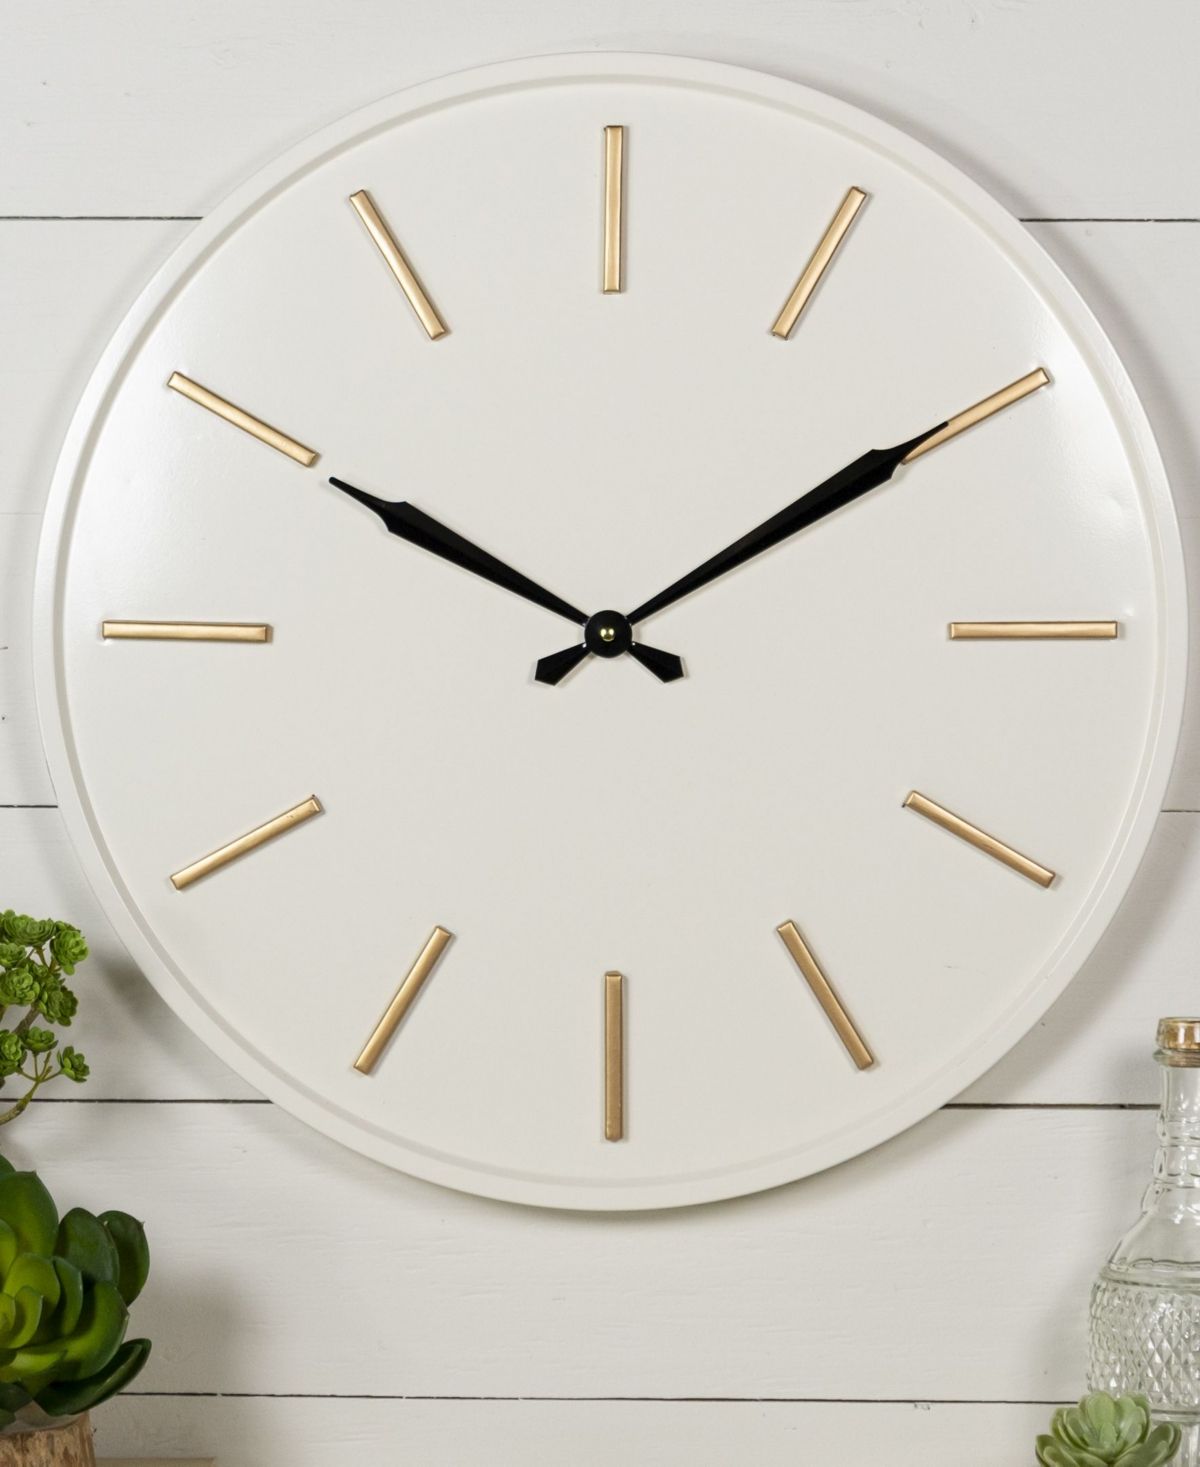 Vip Home & Garden Gold, and Metal Wall Clock | Macys (US)